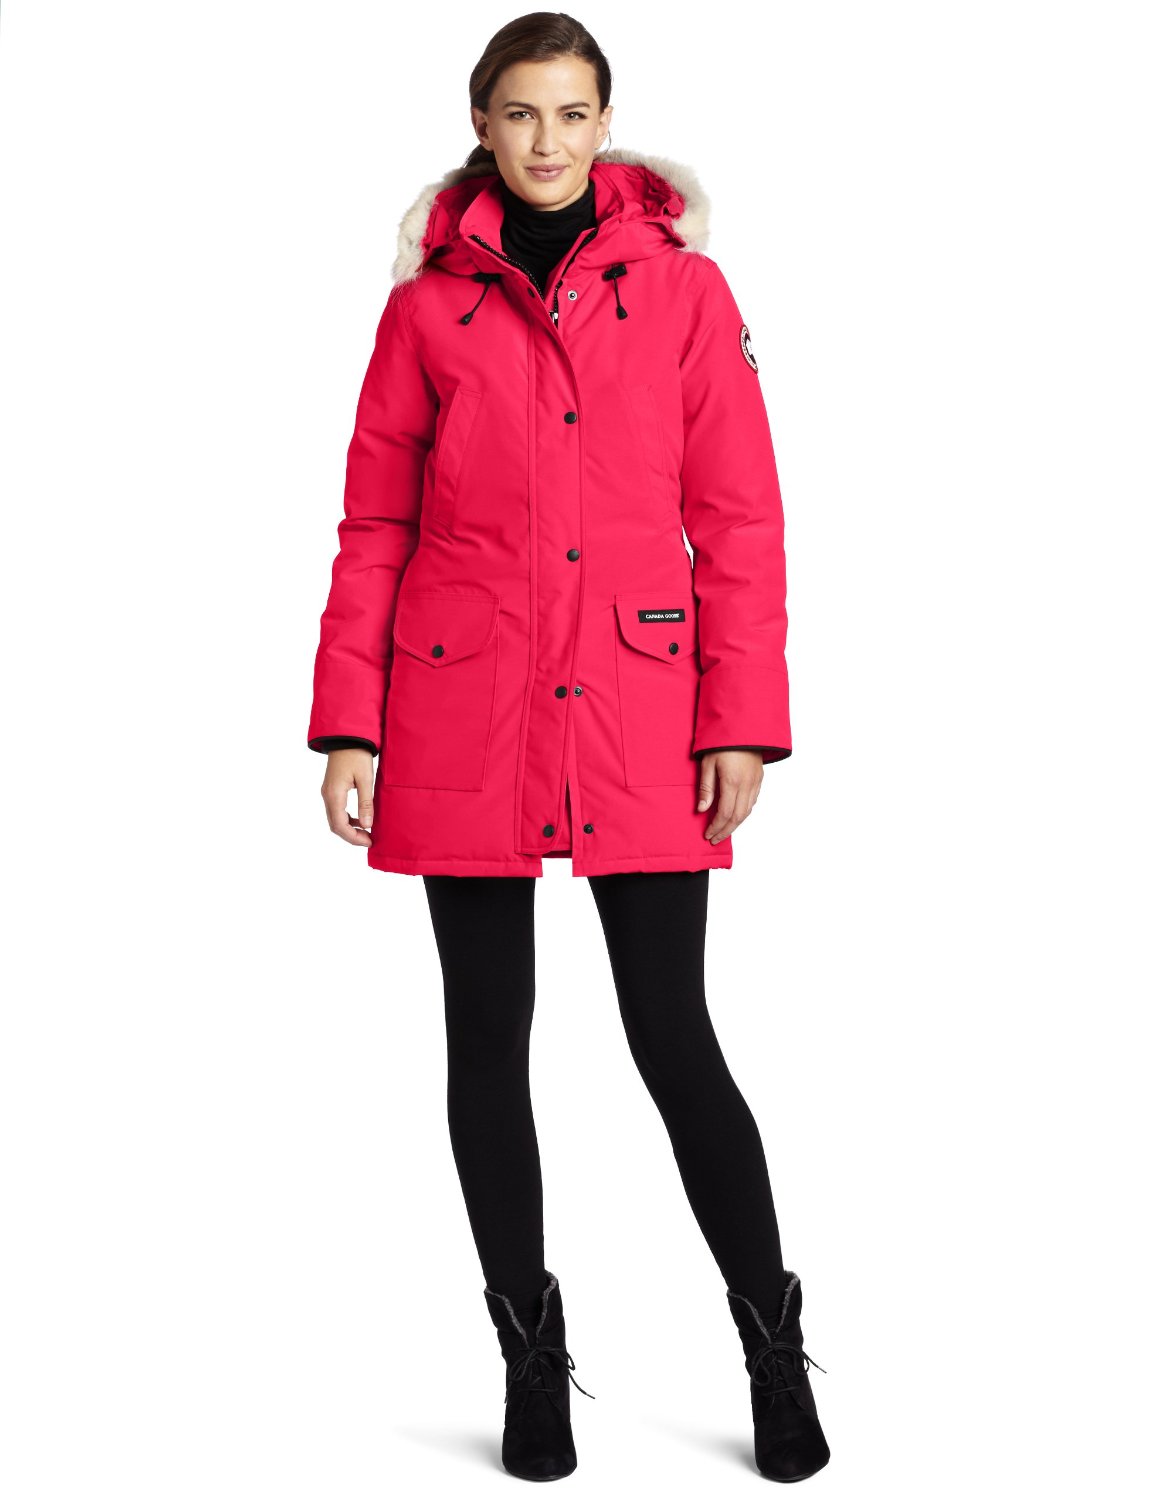 Canada Goose mens online discounts - Canada Goose Trillium Parka best winter Parka? - My Fashion Wants